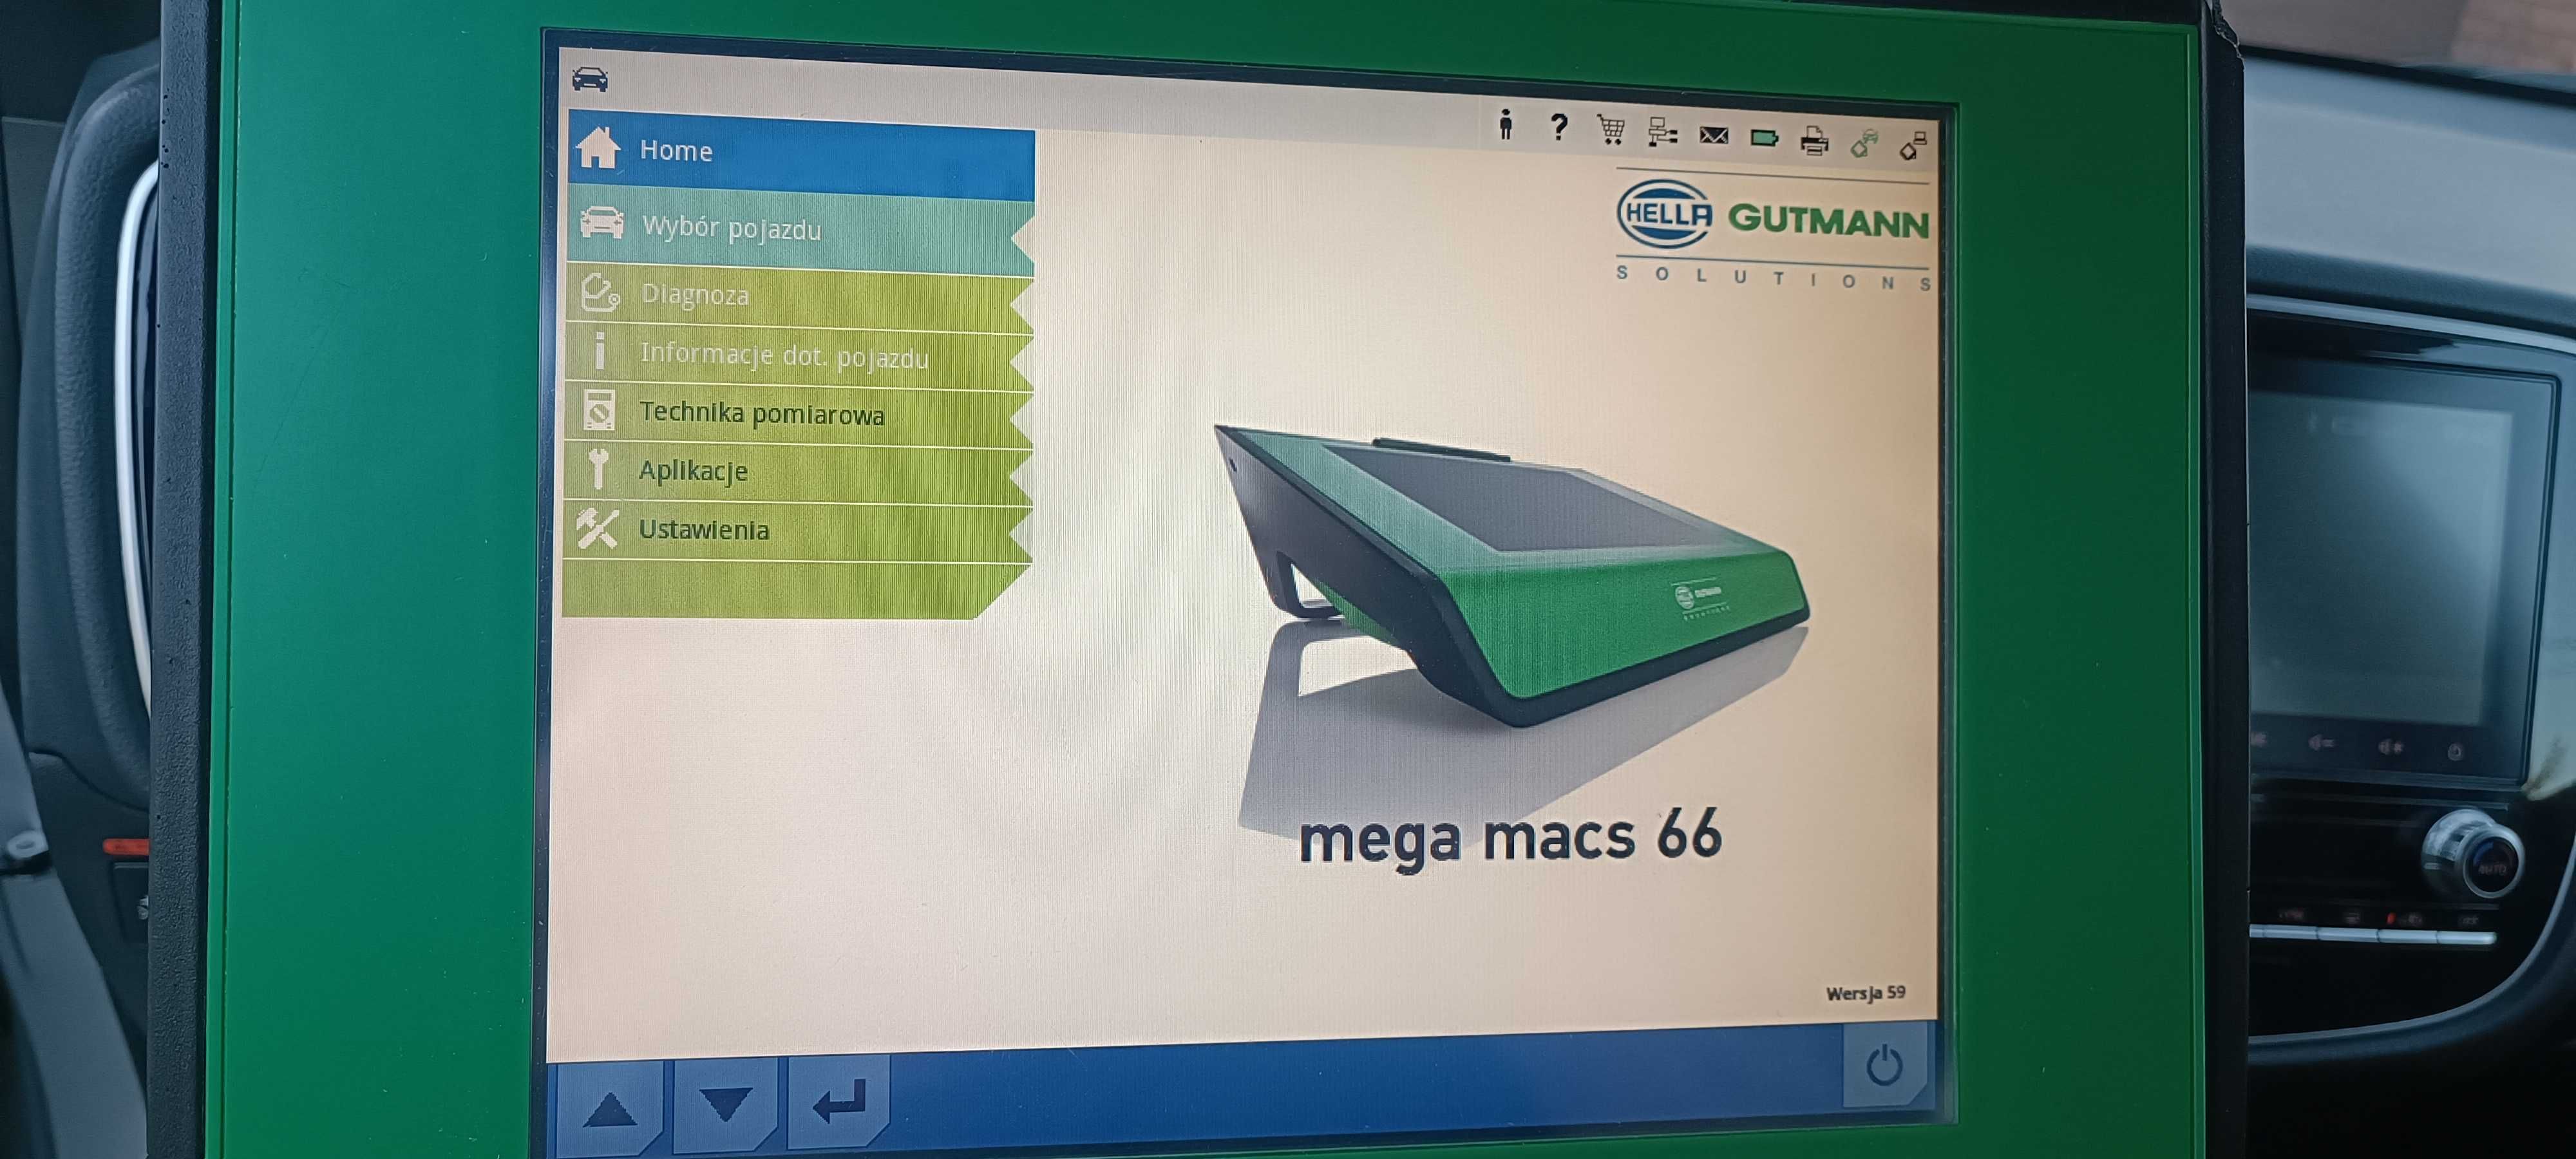 Komputer diagnostyczny Hella Gutmann Mega Macs 66